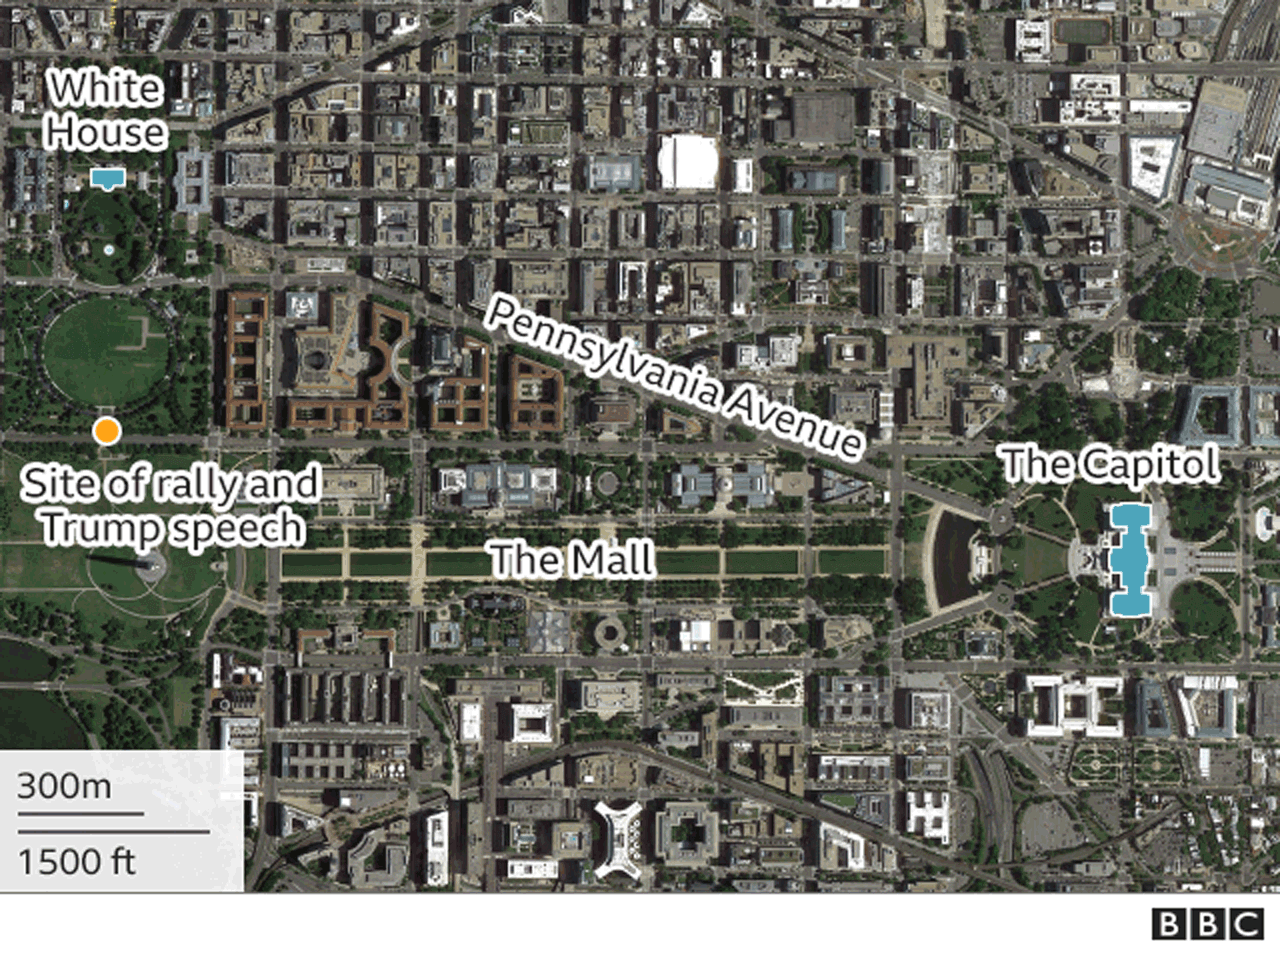 Map of Washington DC locations